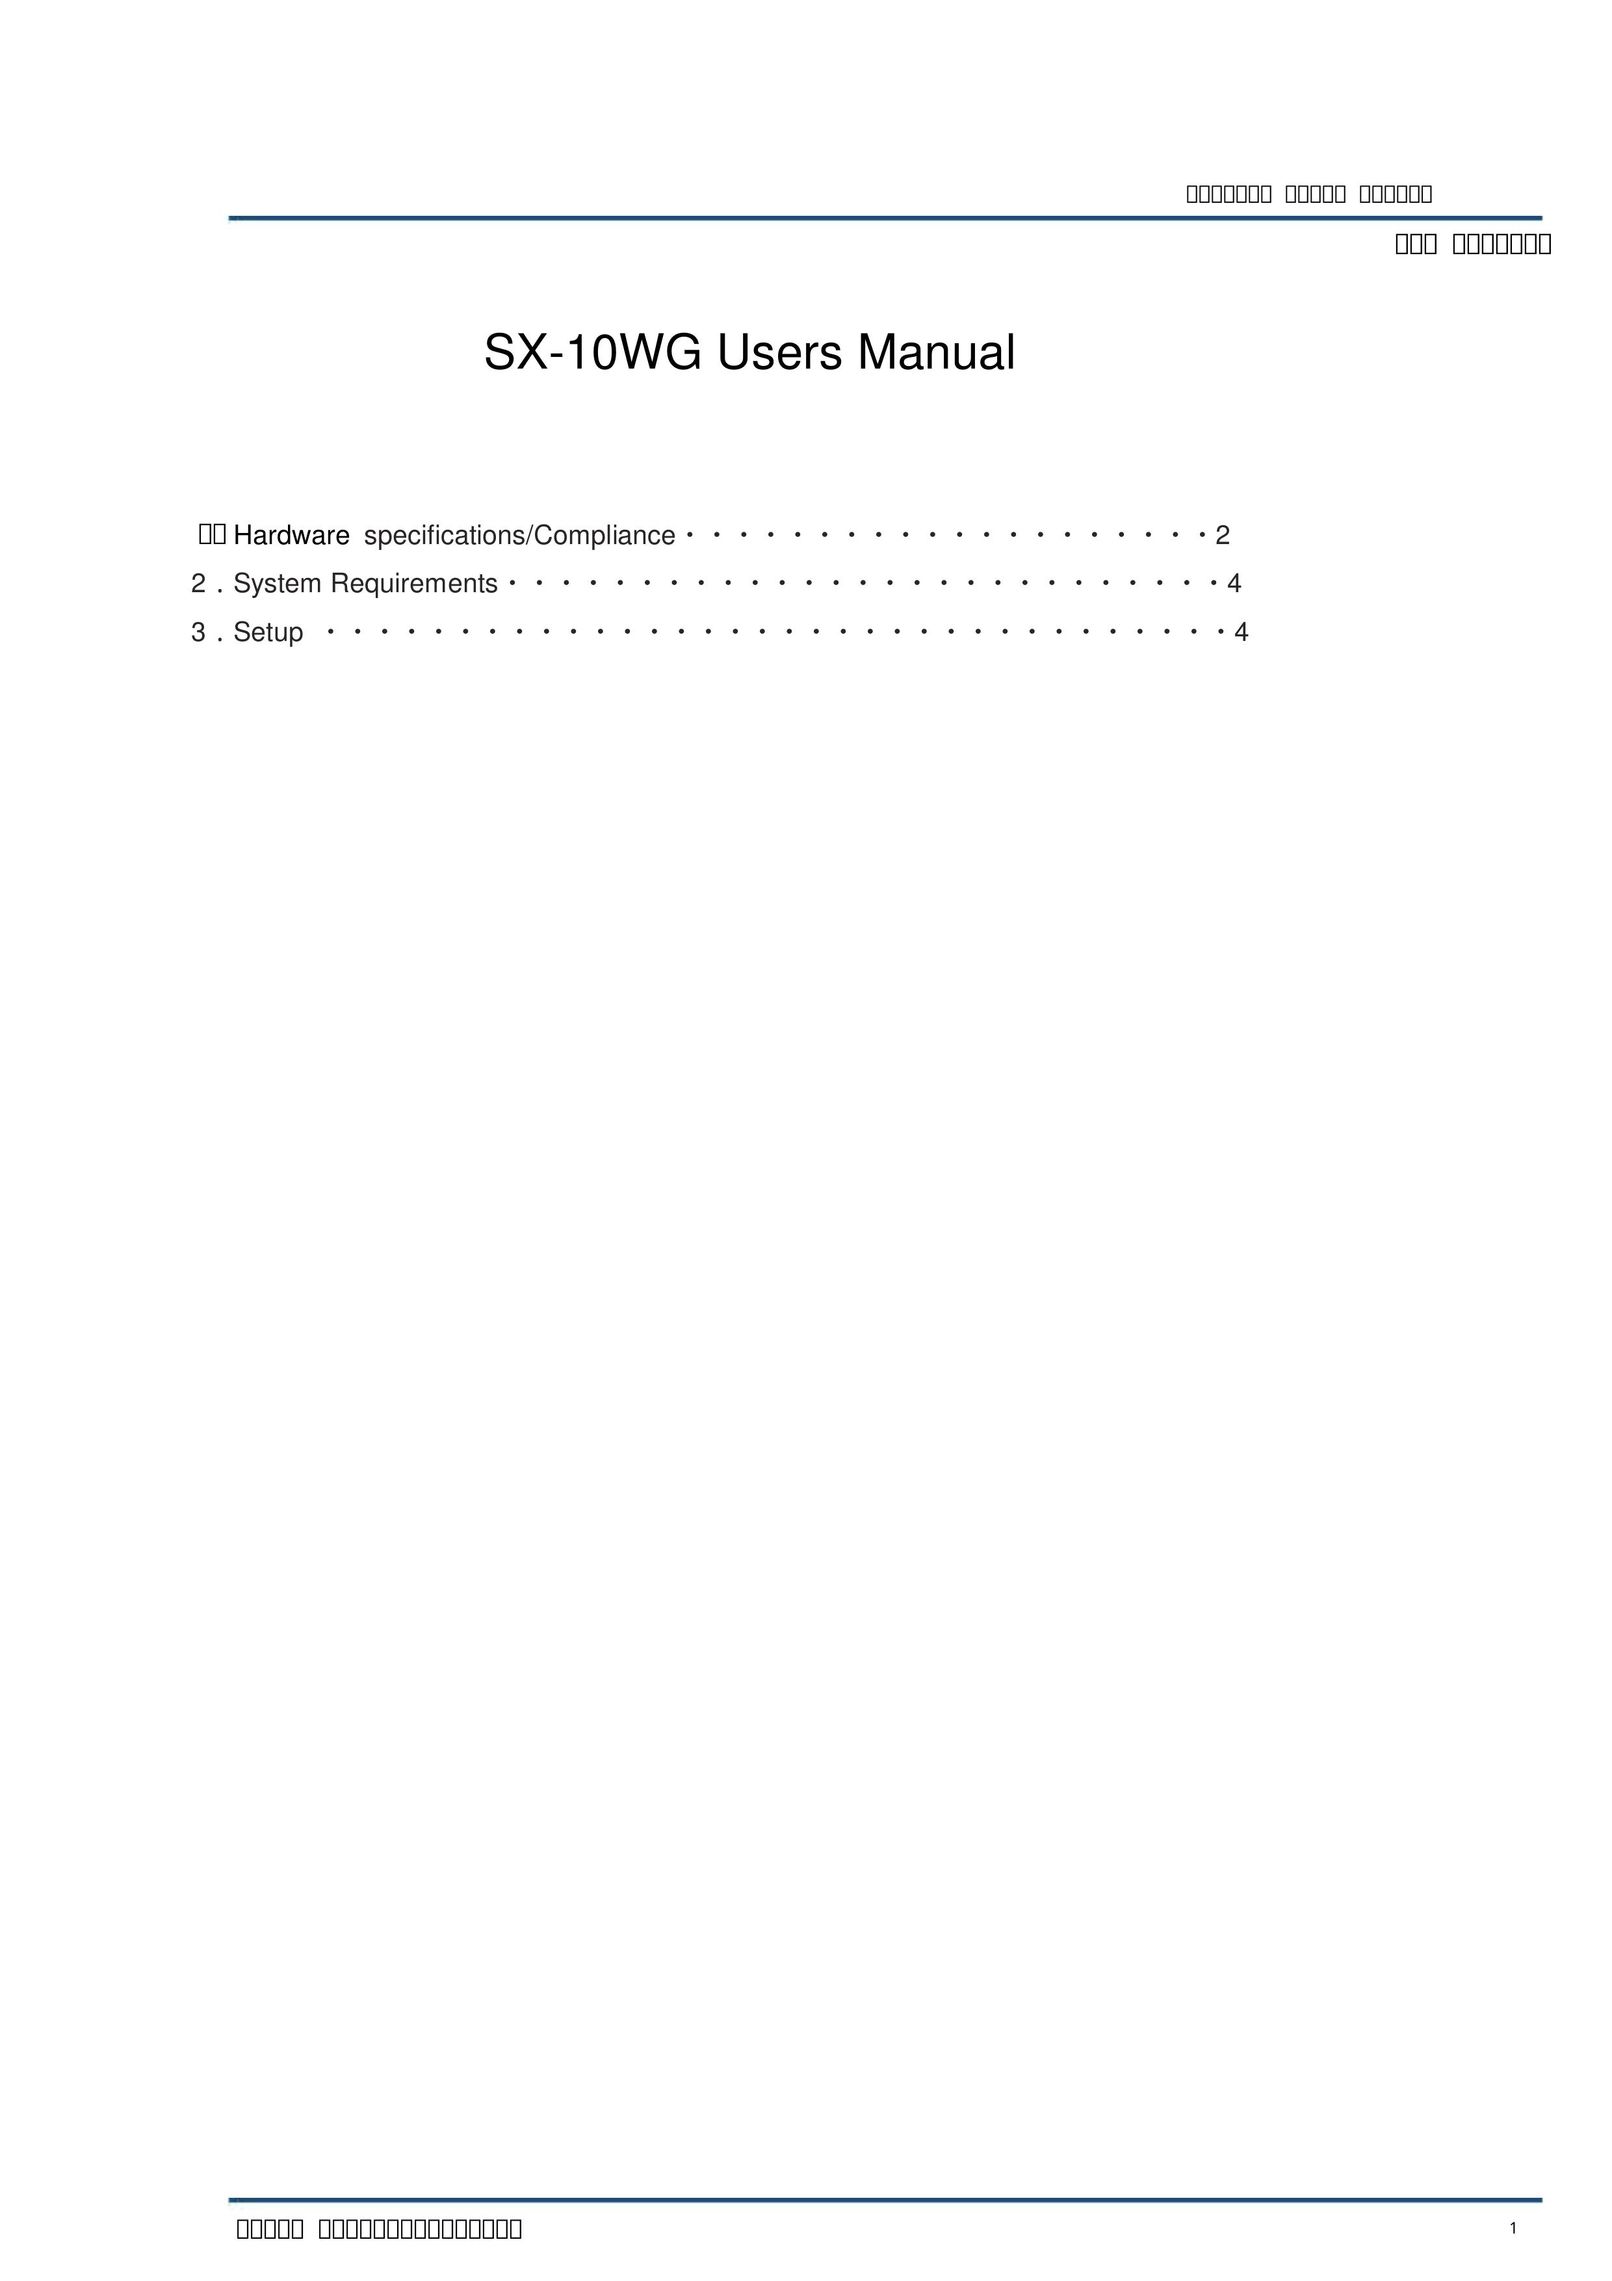 Silex technology SX-10WG Network Card User Manual